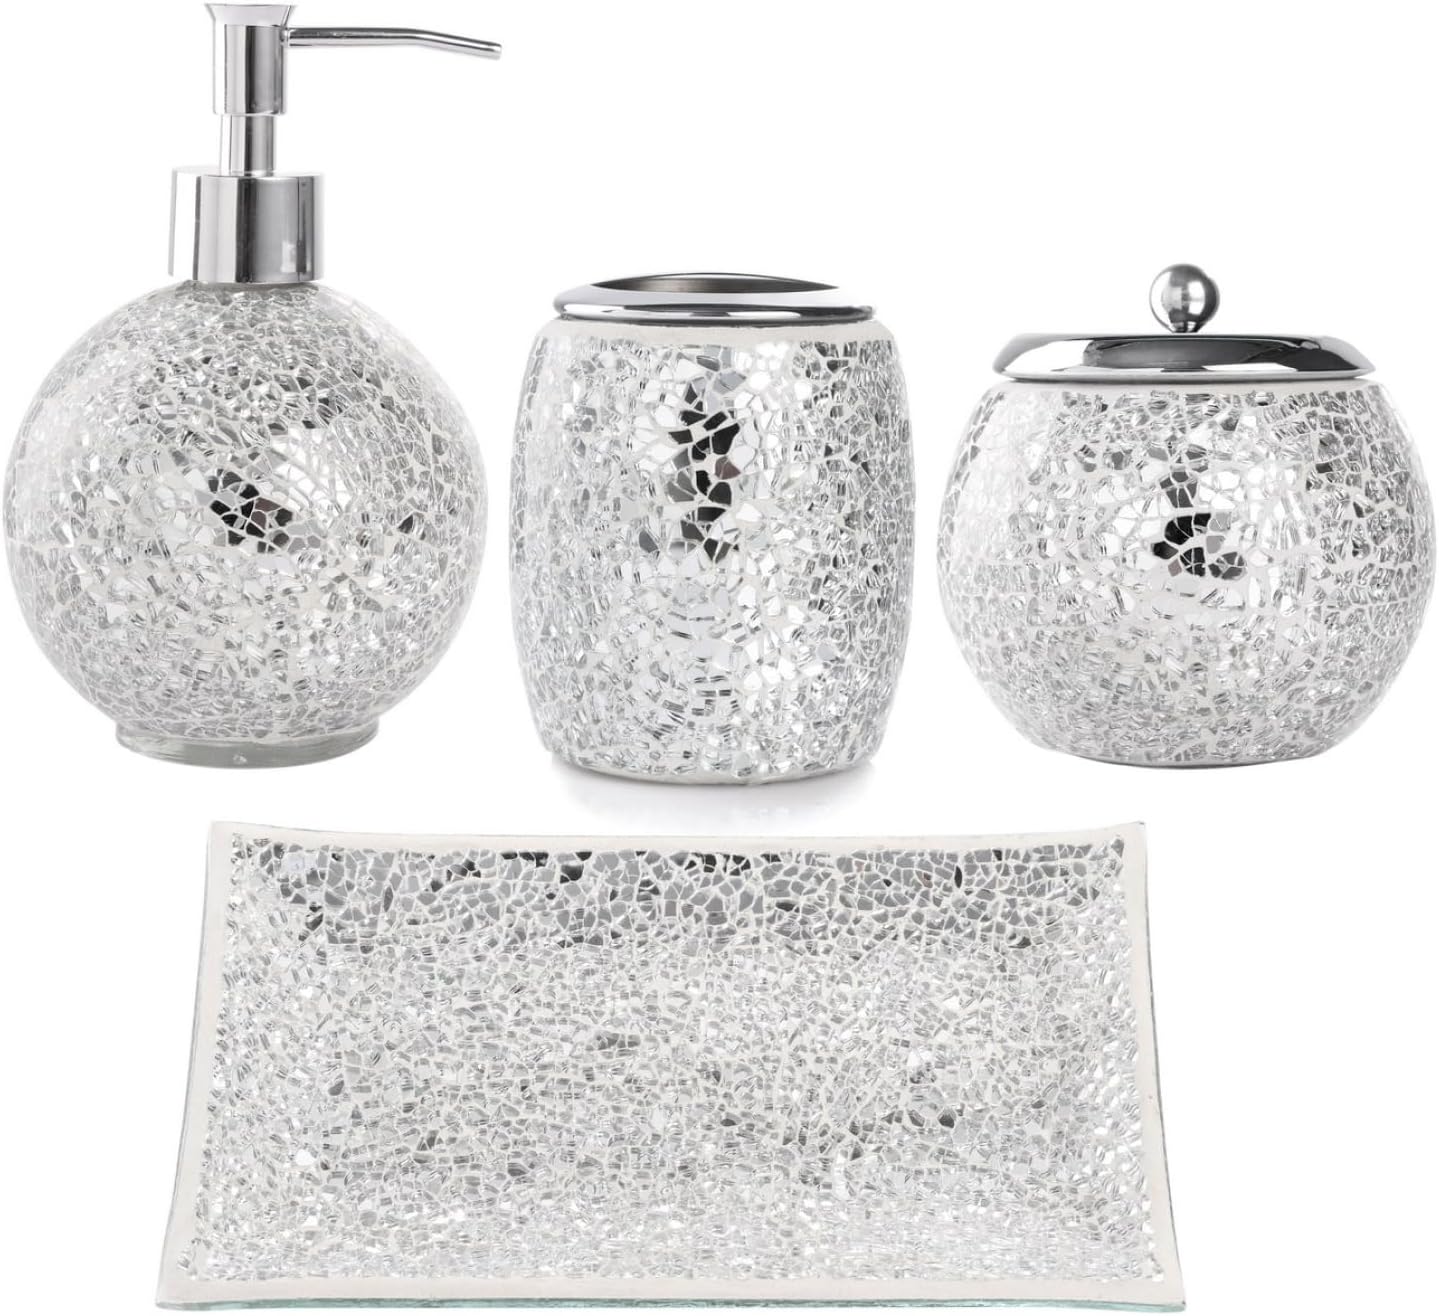 Premium Bathroom Accessory Set | 4-Piece Decorative Glass Bathroom Accessories Set | Soap Dispenser, Tray, Jar, Toothbrush Holder | Gift Idea | Elegant Silver Mosaic Glass (Silver)